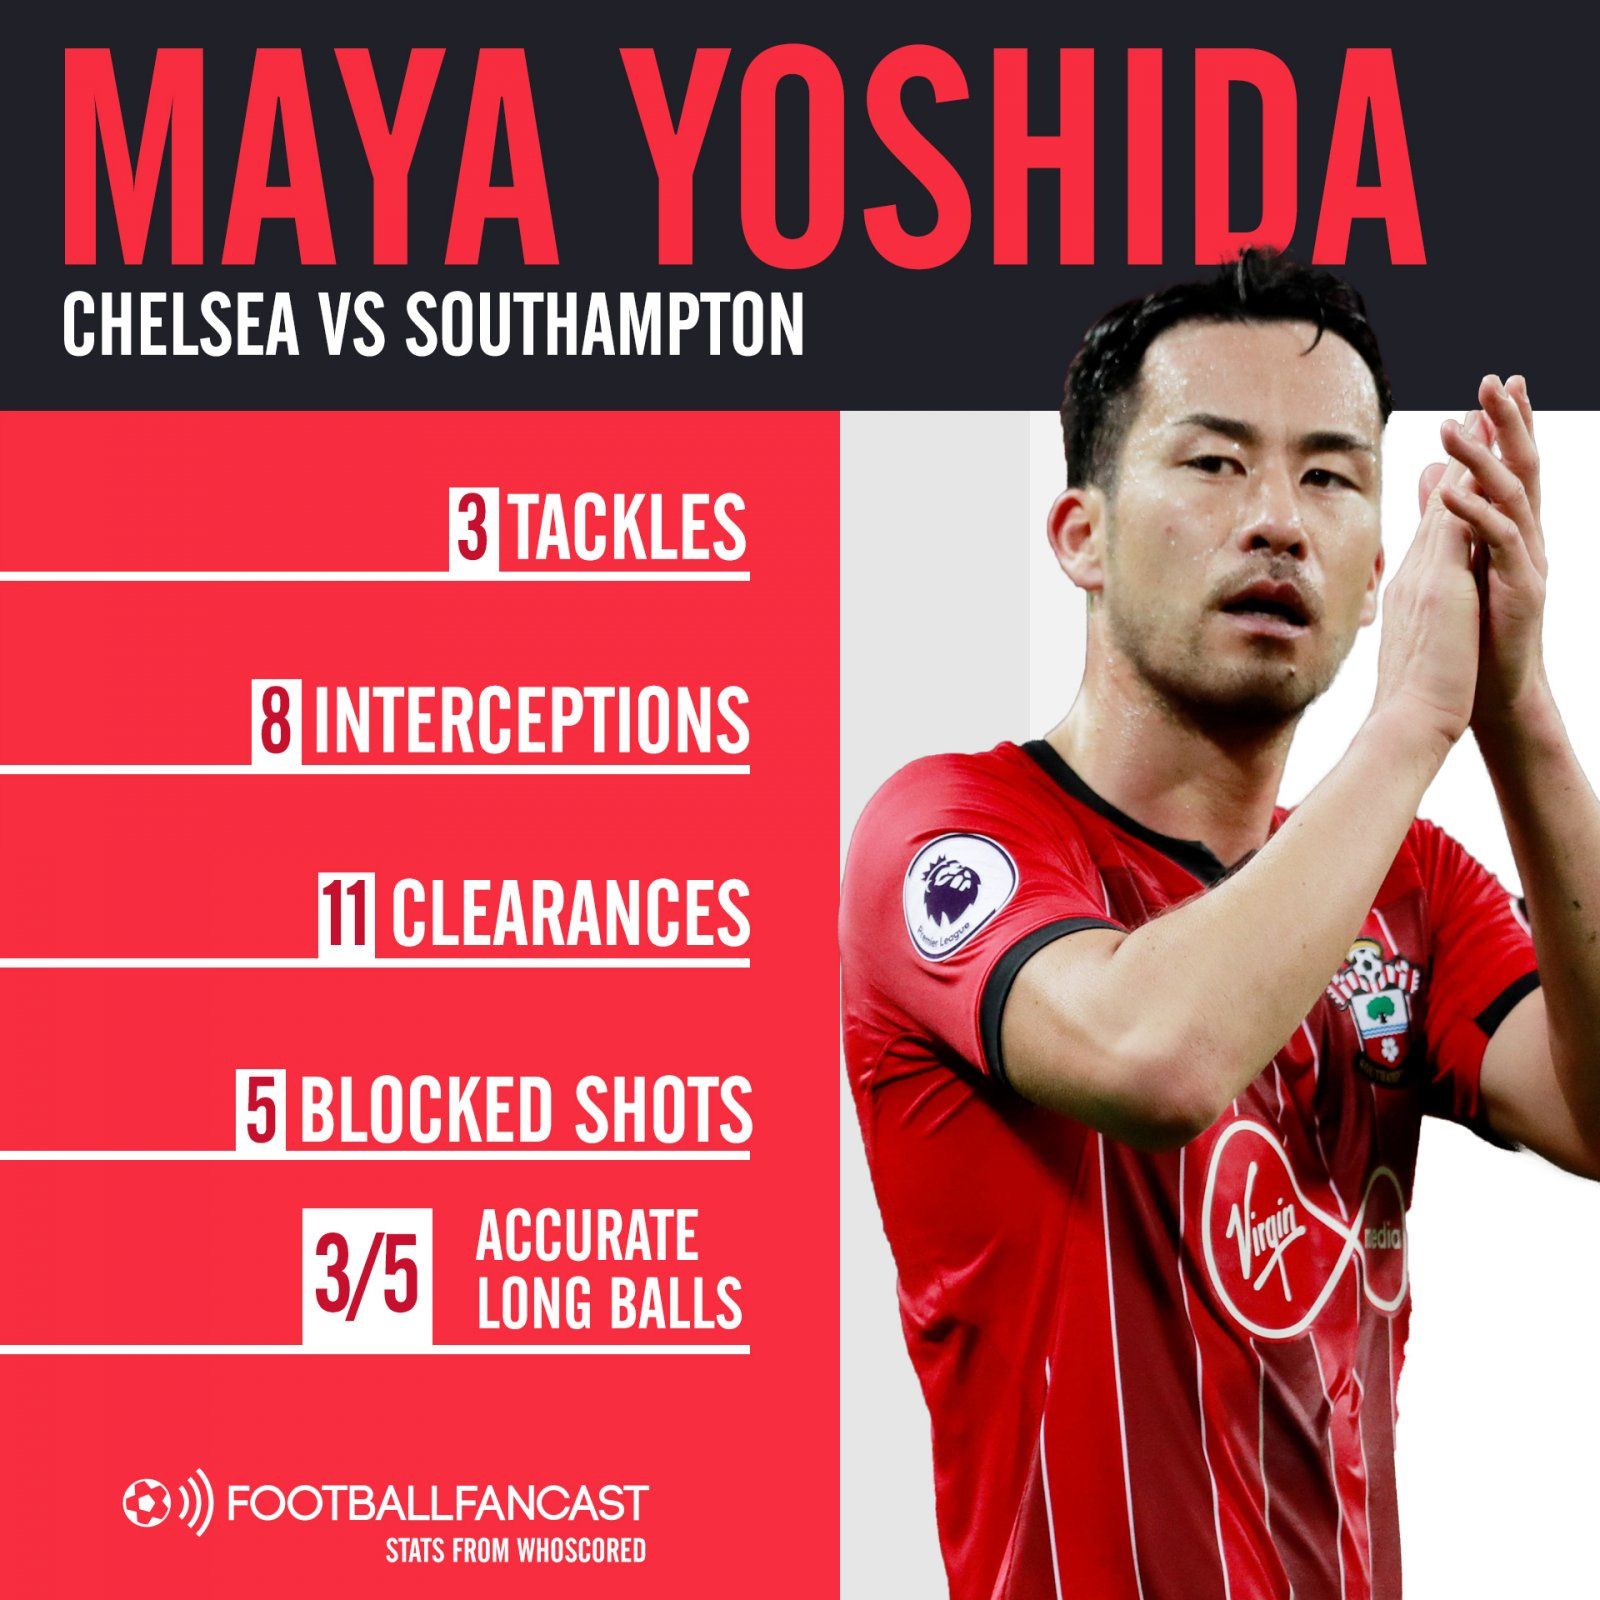 Southampton centre-back Maya Yoshida's stats in draw with Chelsea